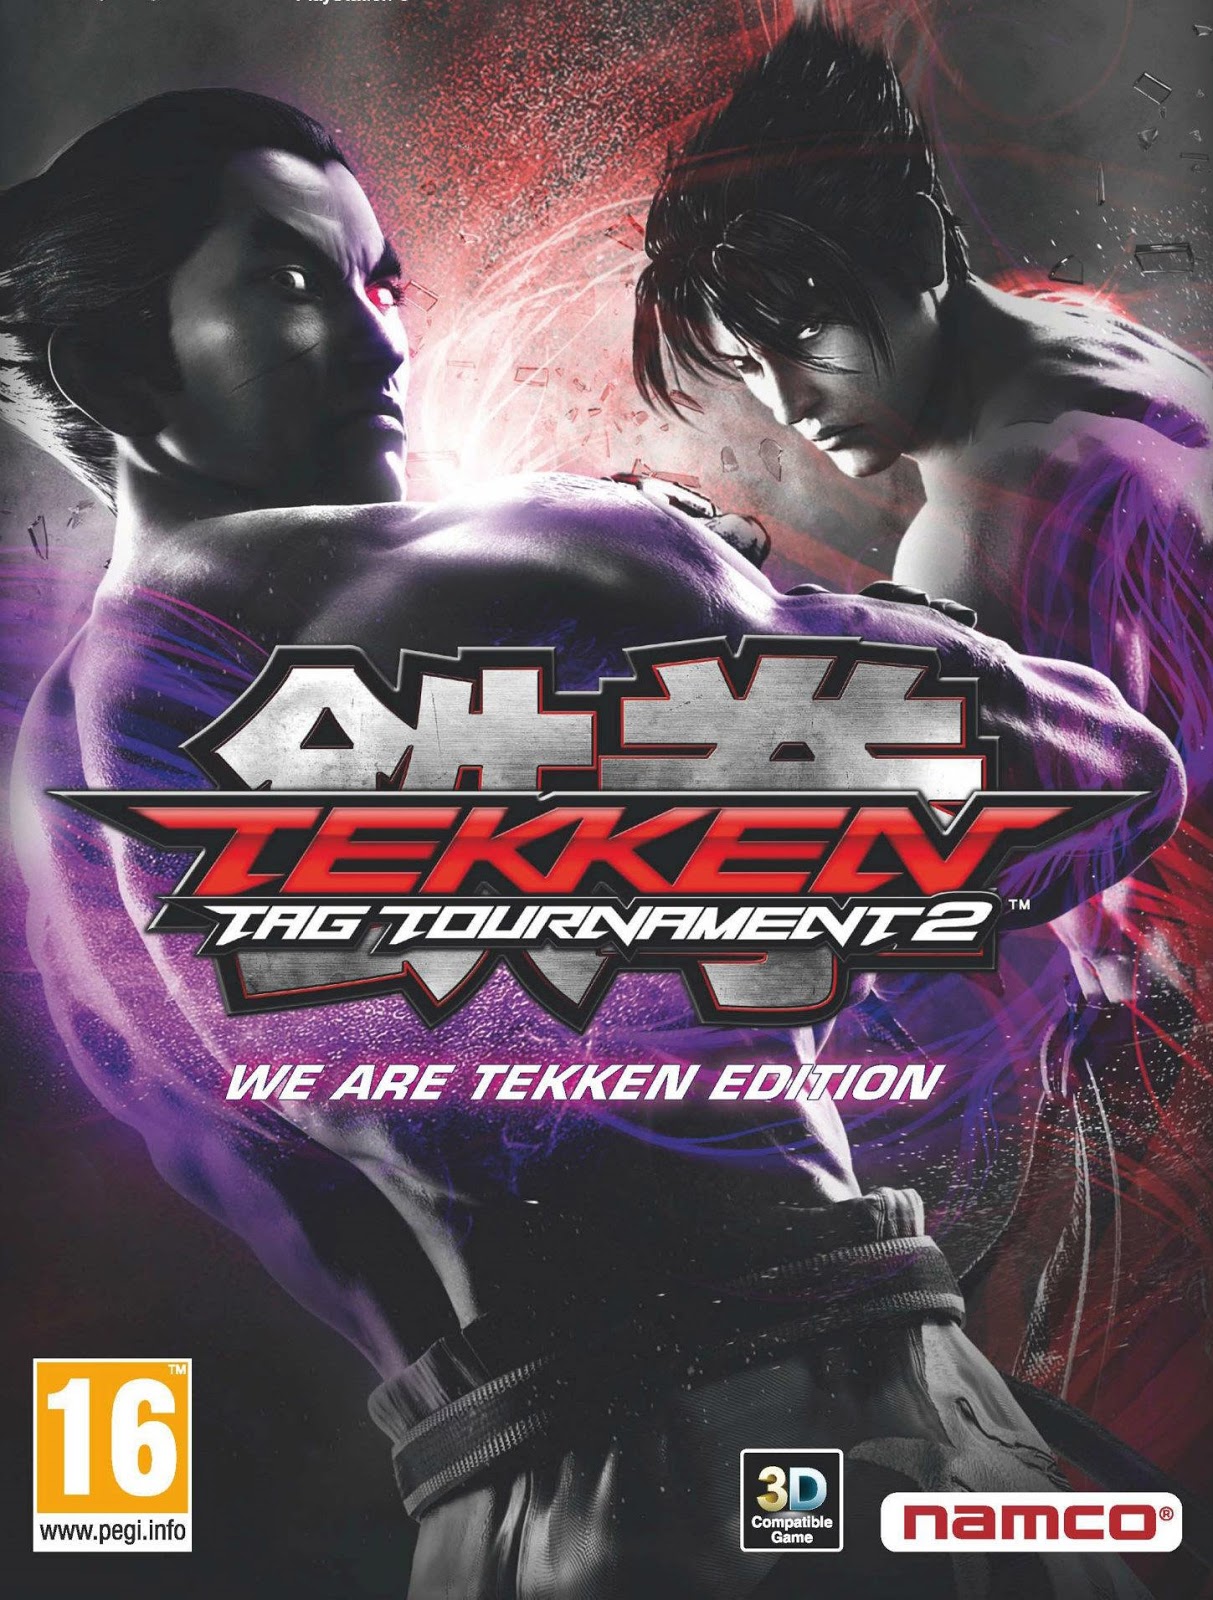 Tekken tag tournament pc download rar